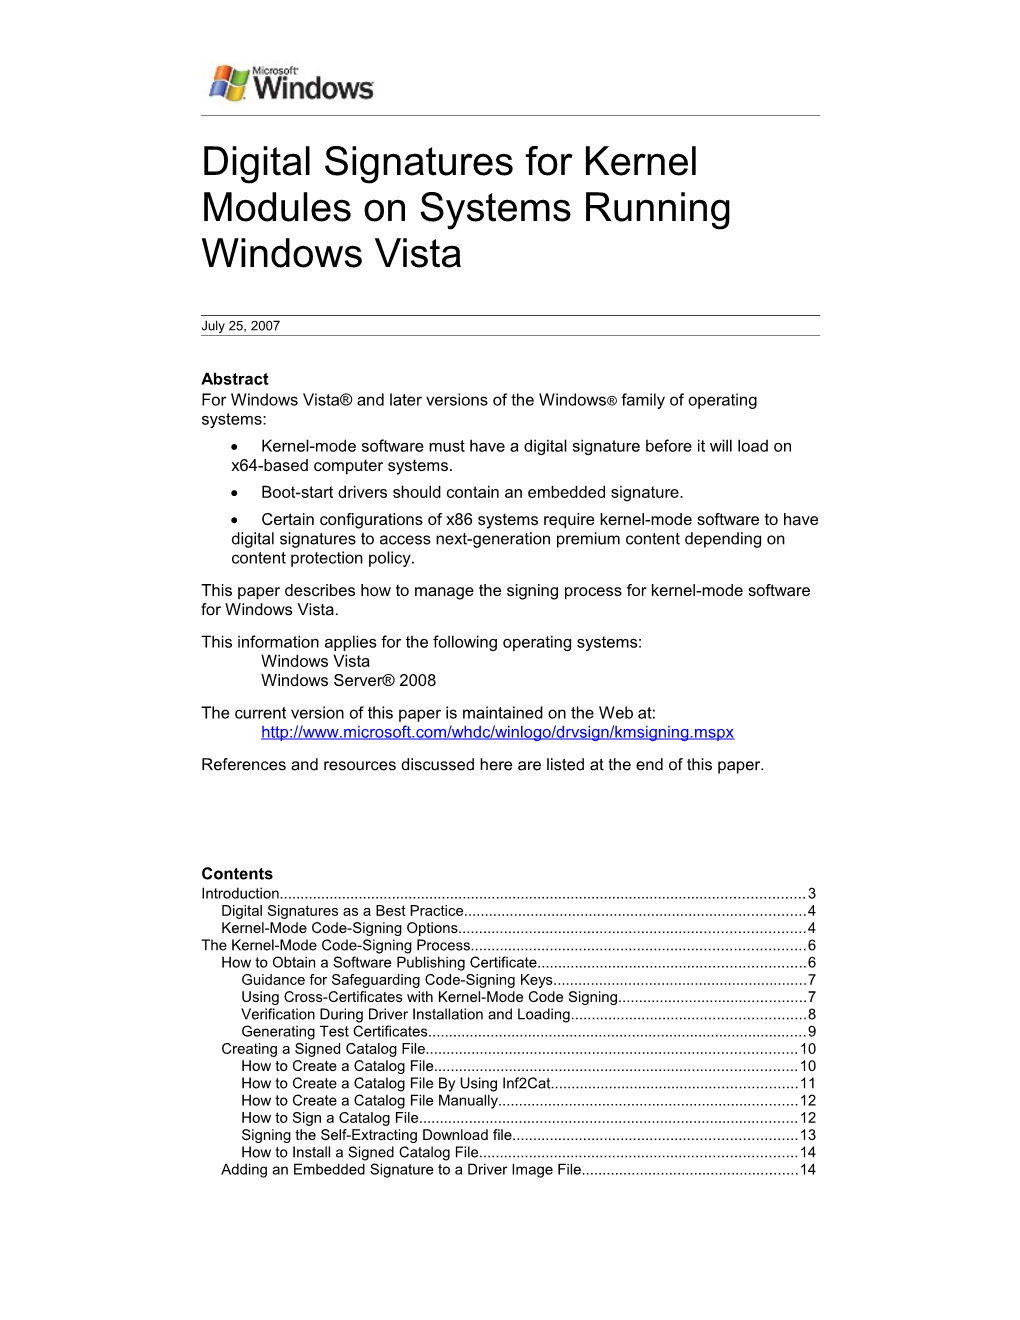 Digital Signatures for Kernel Modules on Systems Running Windows Vista